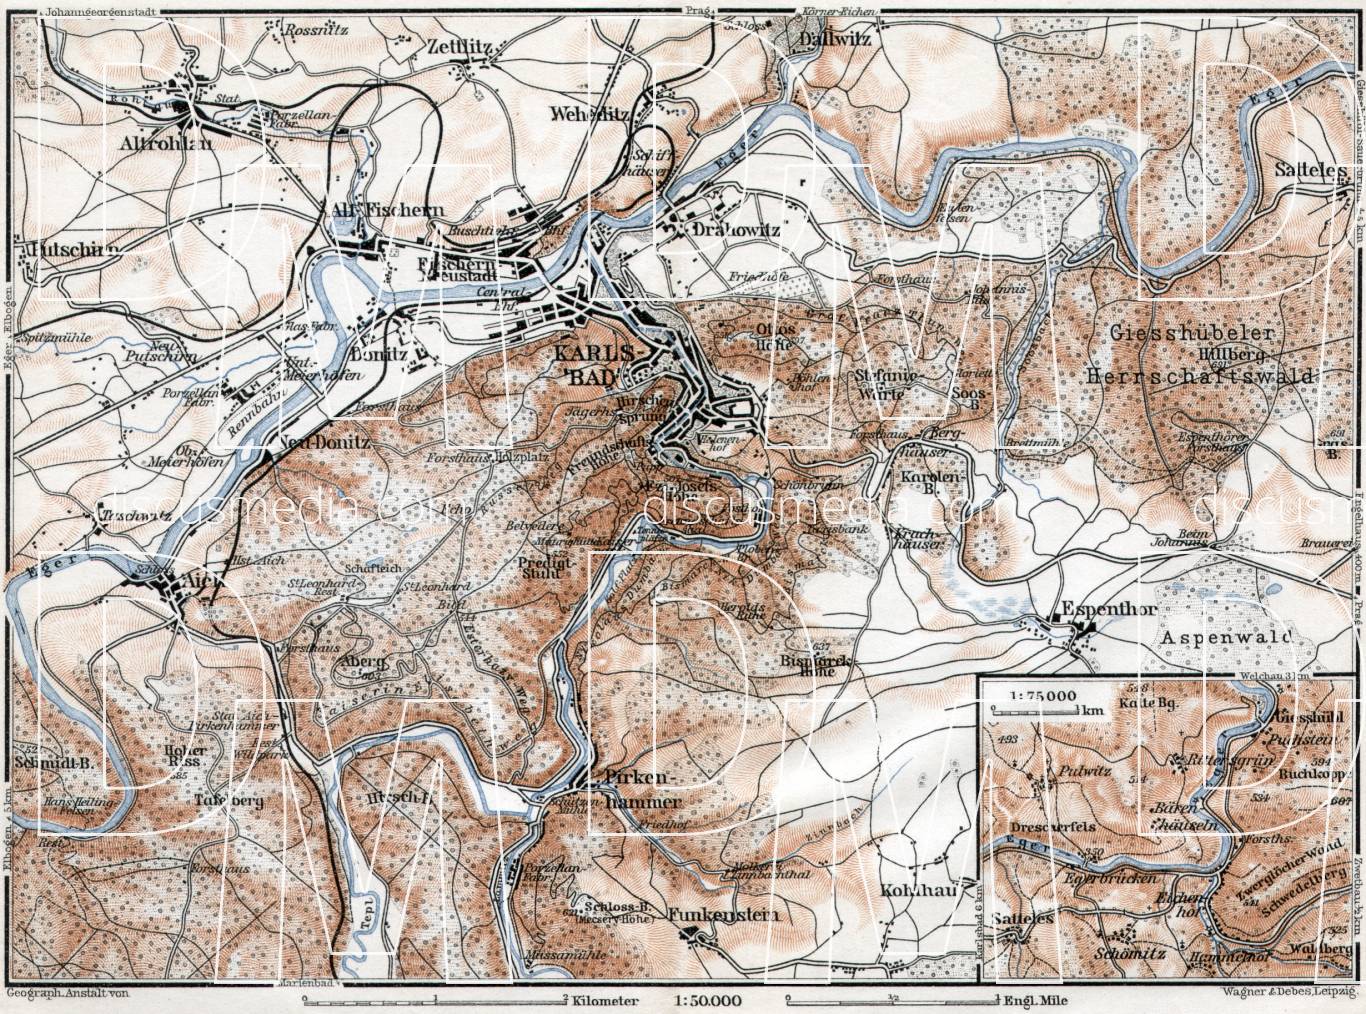 Old map of Karlsbad (Karlový Vary) and vicinity in 1910. Buy vintage